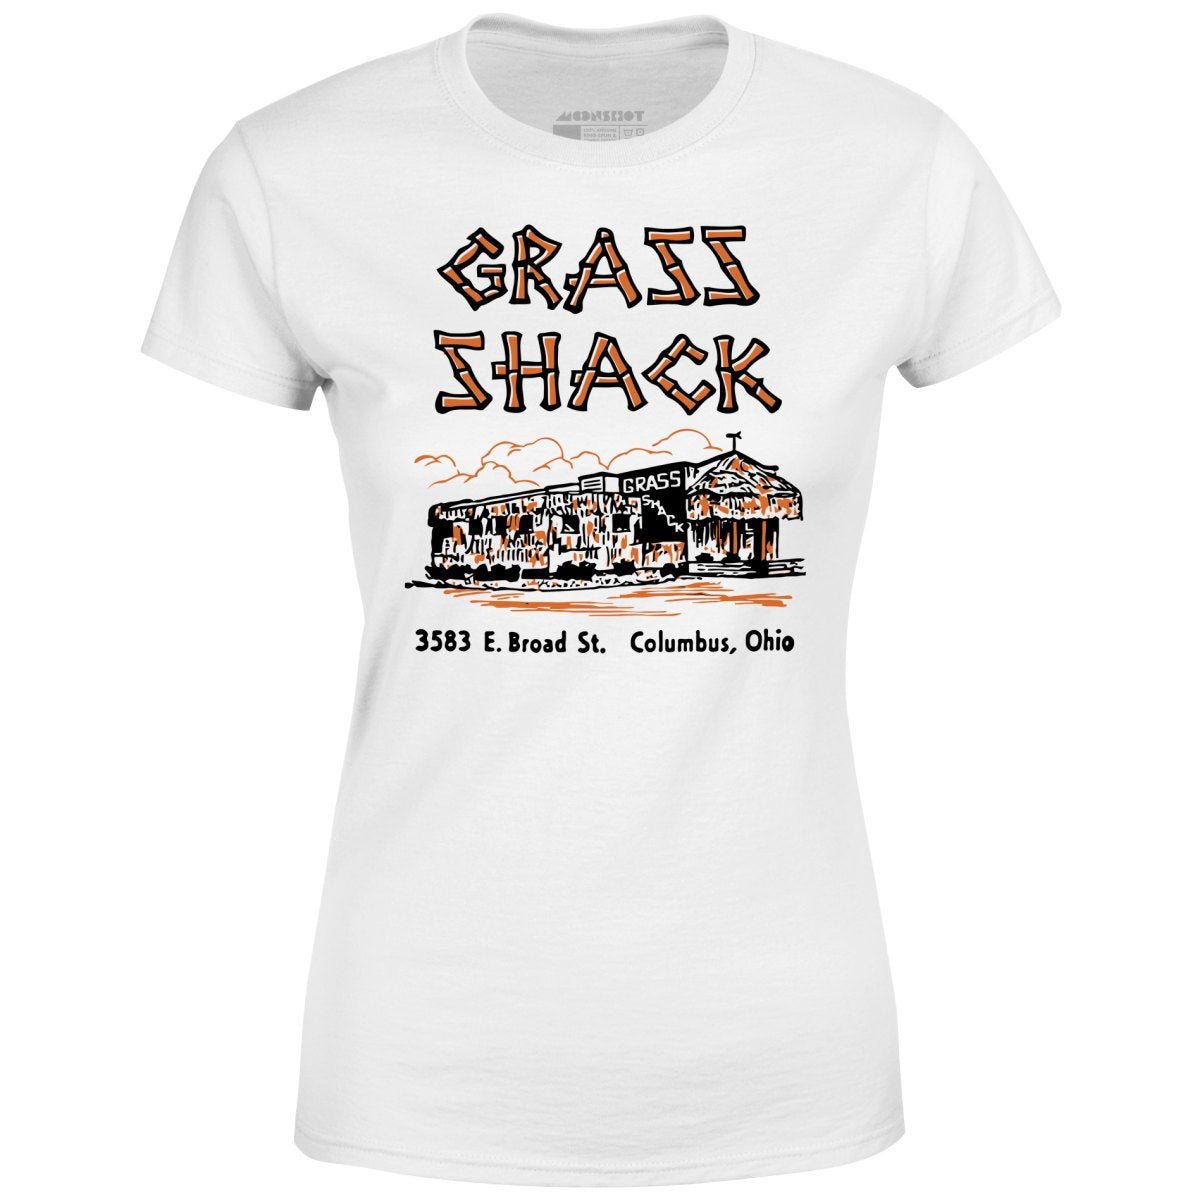 Grass Shack - Columbus, OH - Vintage Tiki Bar - Women's T-Shirt